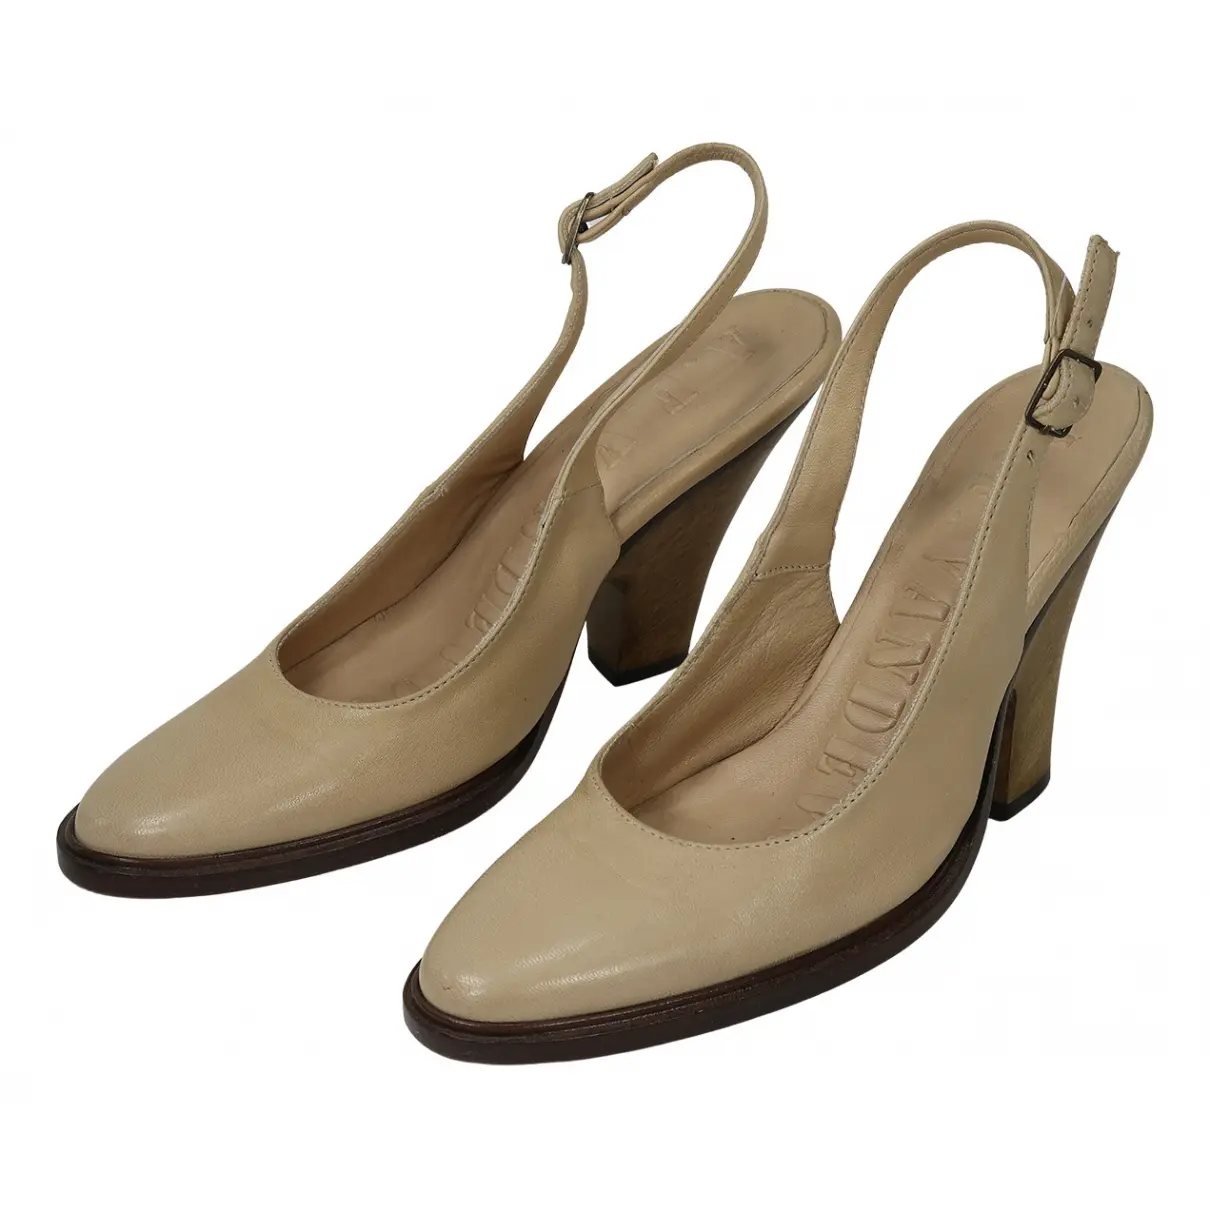 Patent leather heels A.F.Vandevorst